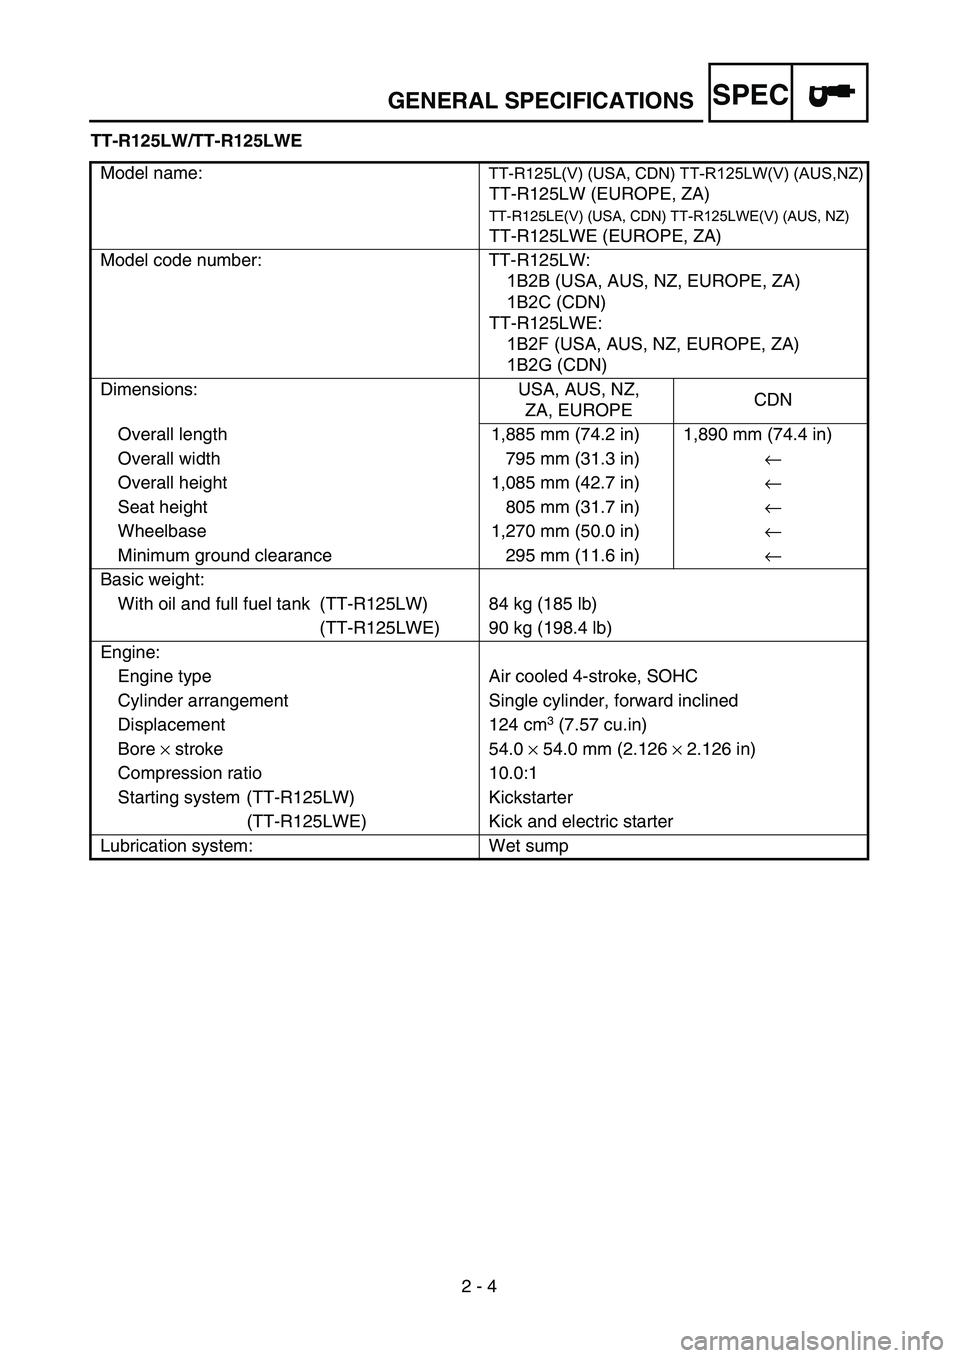 YAMAHA TTR125 2006  Owners Manual SPEC
2 - 4
GENERAL SPECIFICATIONS
TT-R125LW/TT-R125LWEModel name: TT-R125L(V) (USA, CDN) TT-R125LW(V) (AUS,NZ) TT-R125LW (EUROPE, ZA)
TT-R125LE(V) (USA, CDN) TT-R125LWE(V) (AUS, NZ)
TT-R125LWE (EUROPE